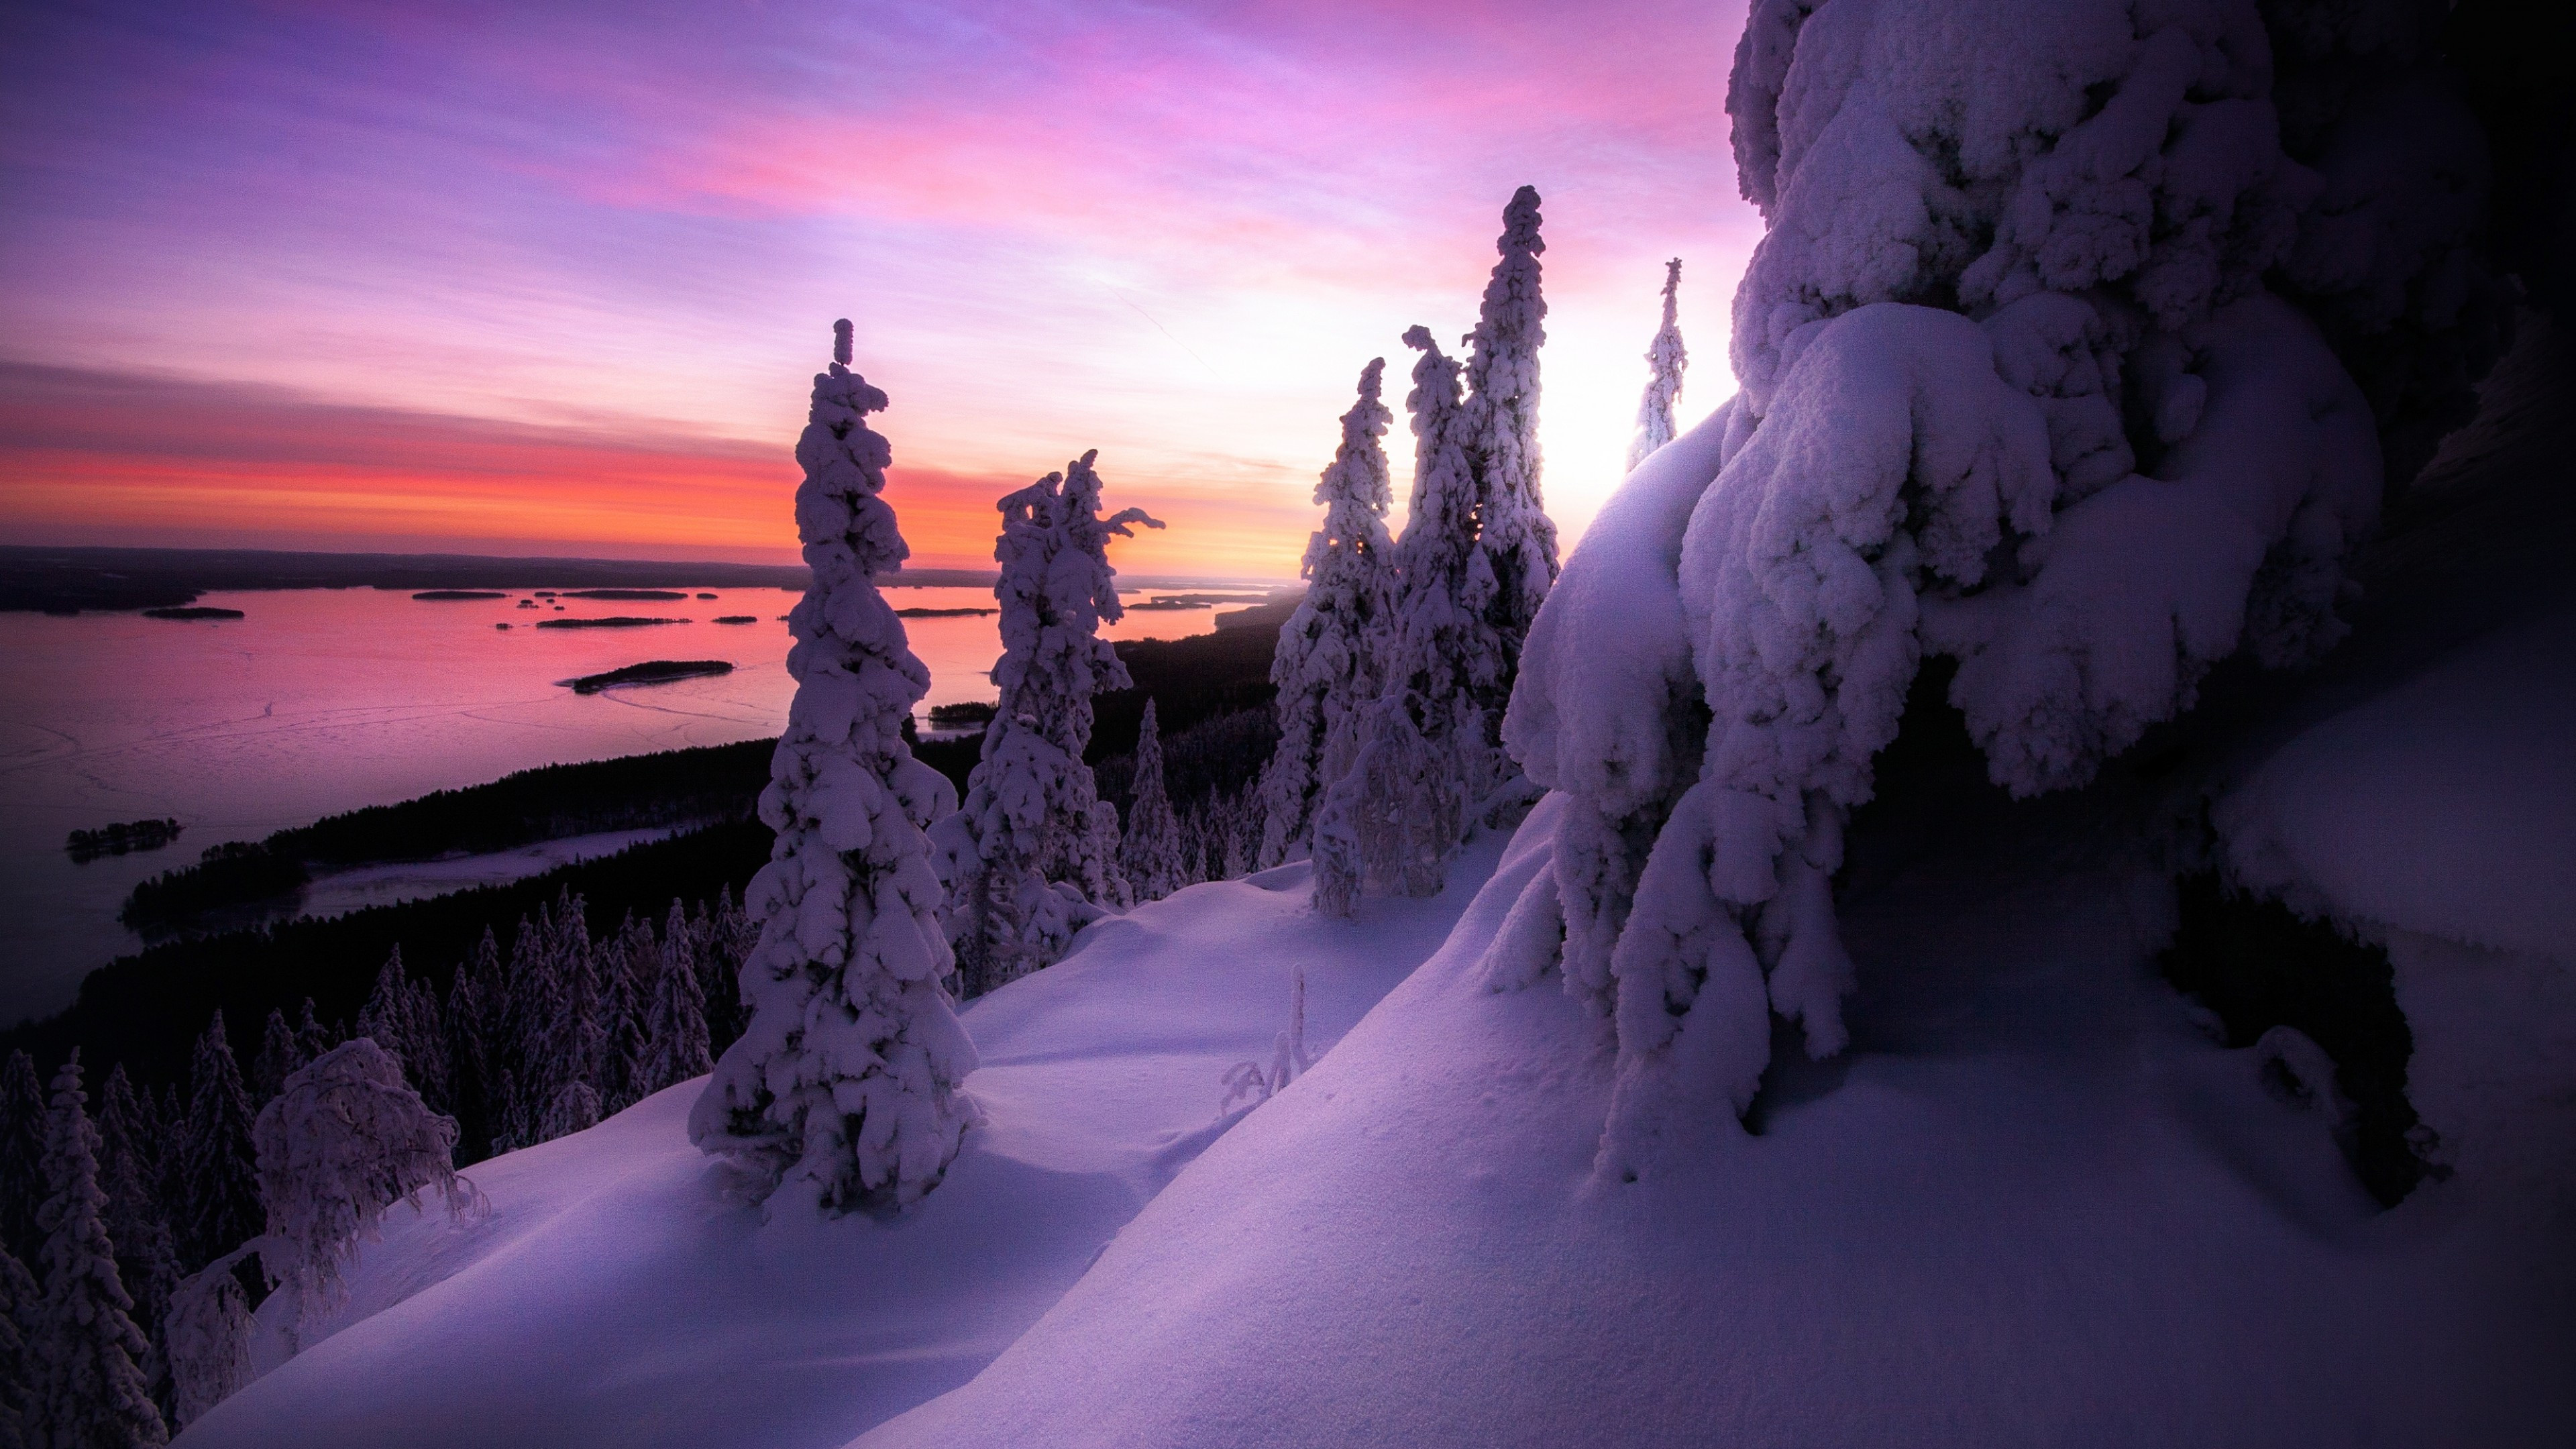 Finland: Koli National Park, Snow, Trees, Countryside, Scenery. 3840x2160 4K Wallpaper.